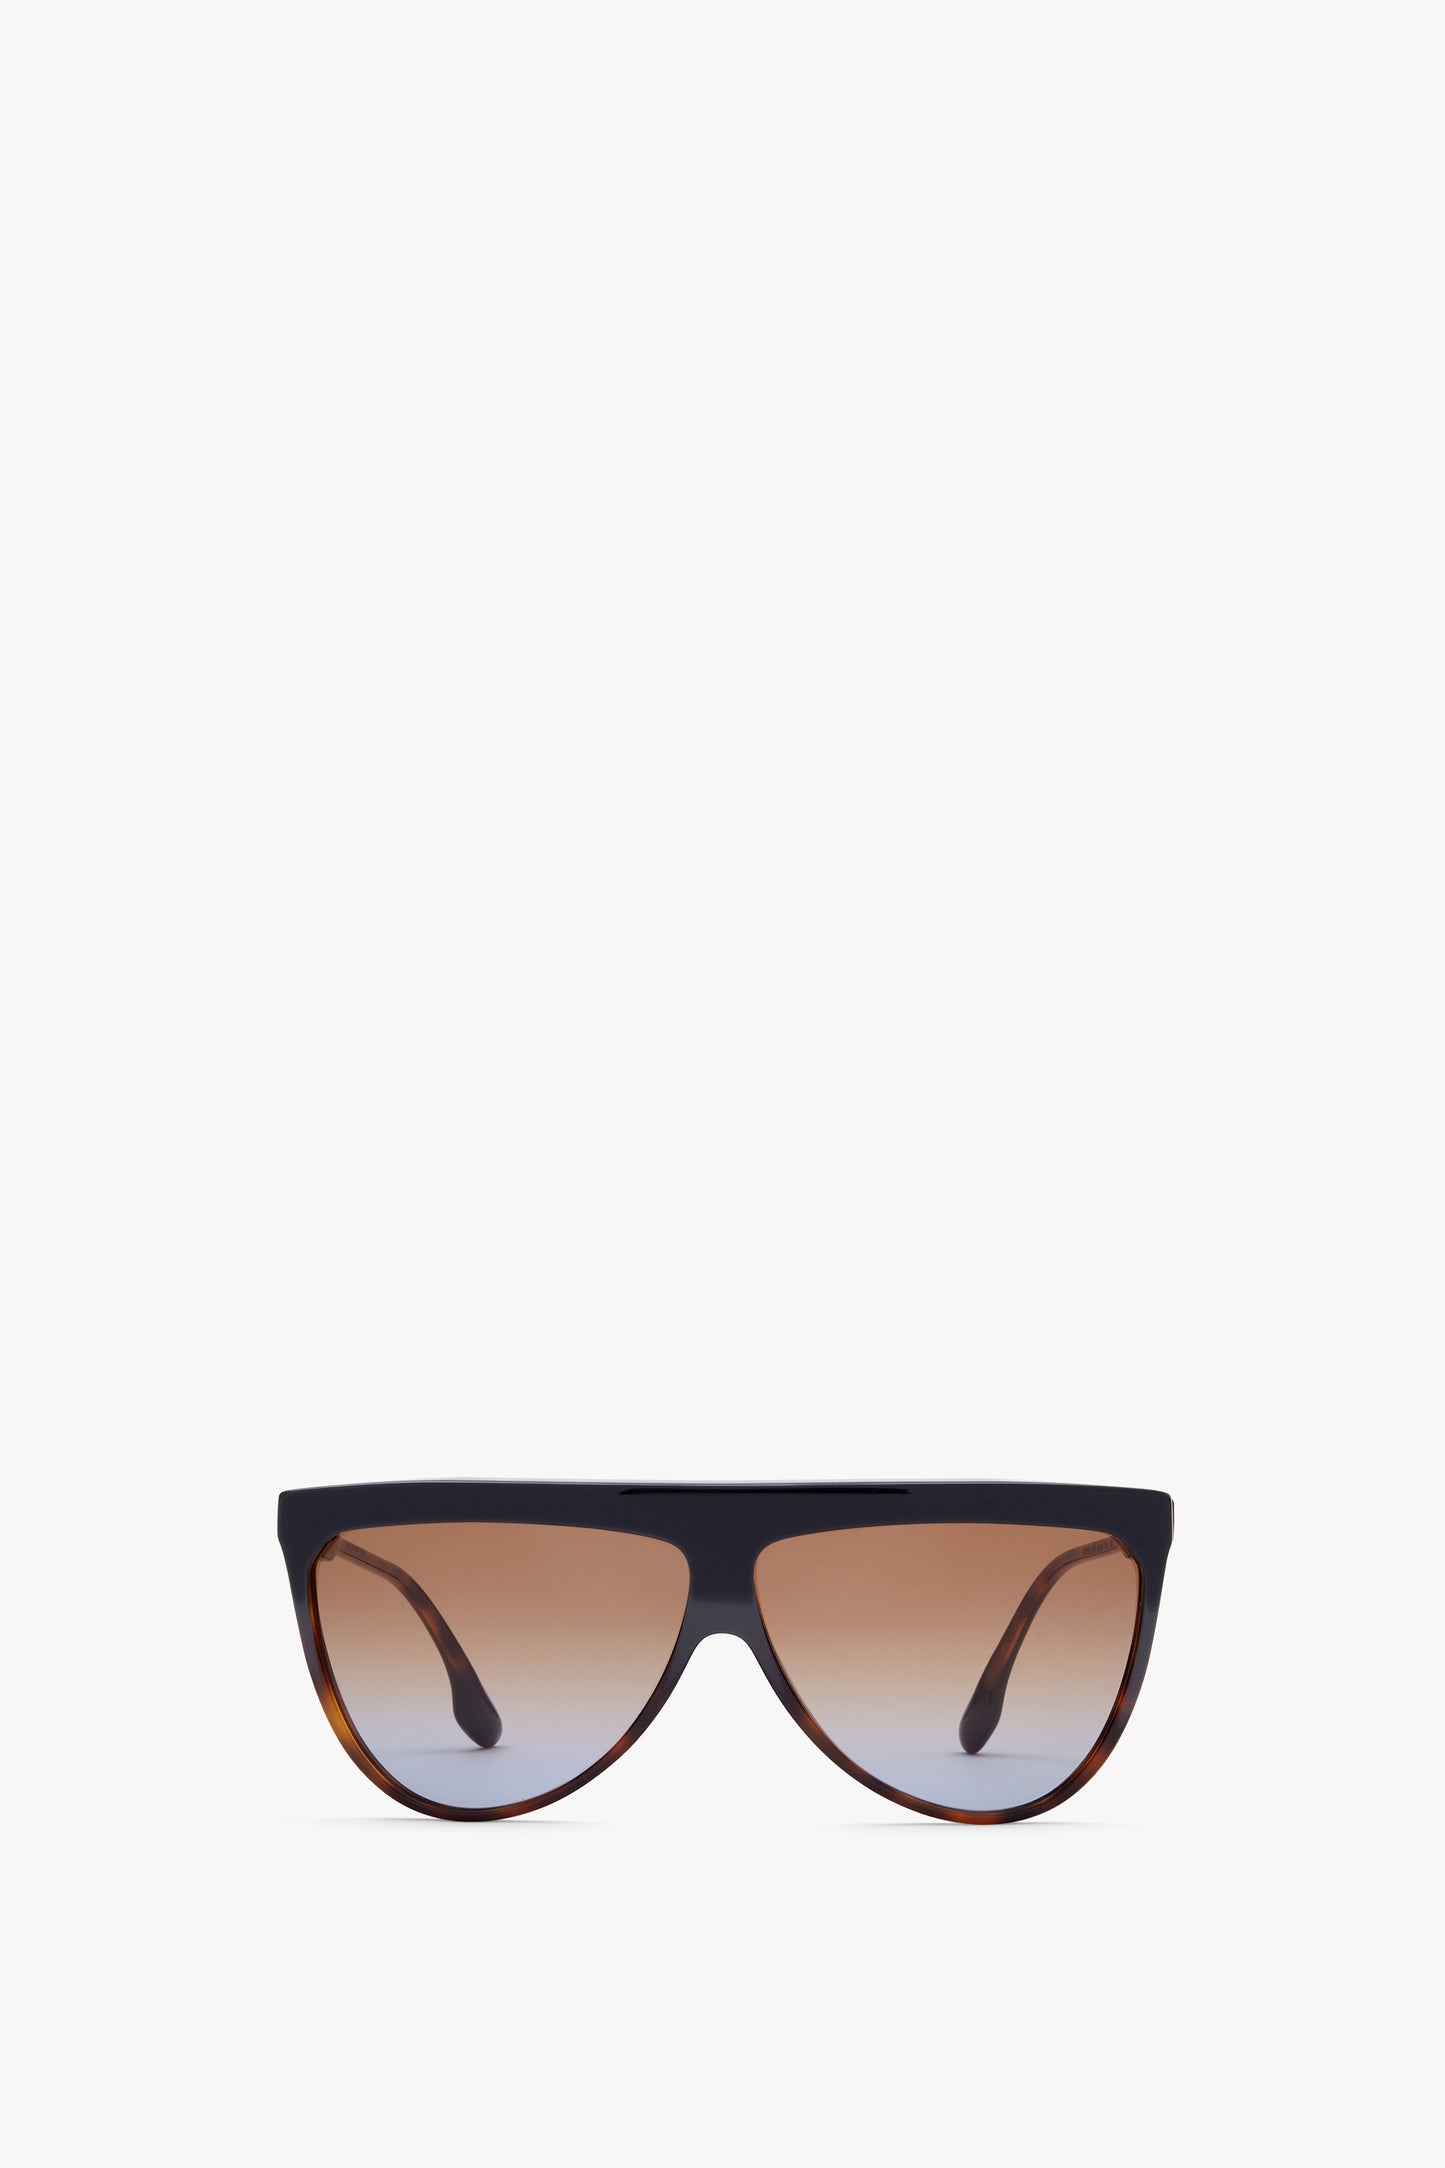 Flat Top V Sunglasses In Black Tortoise